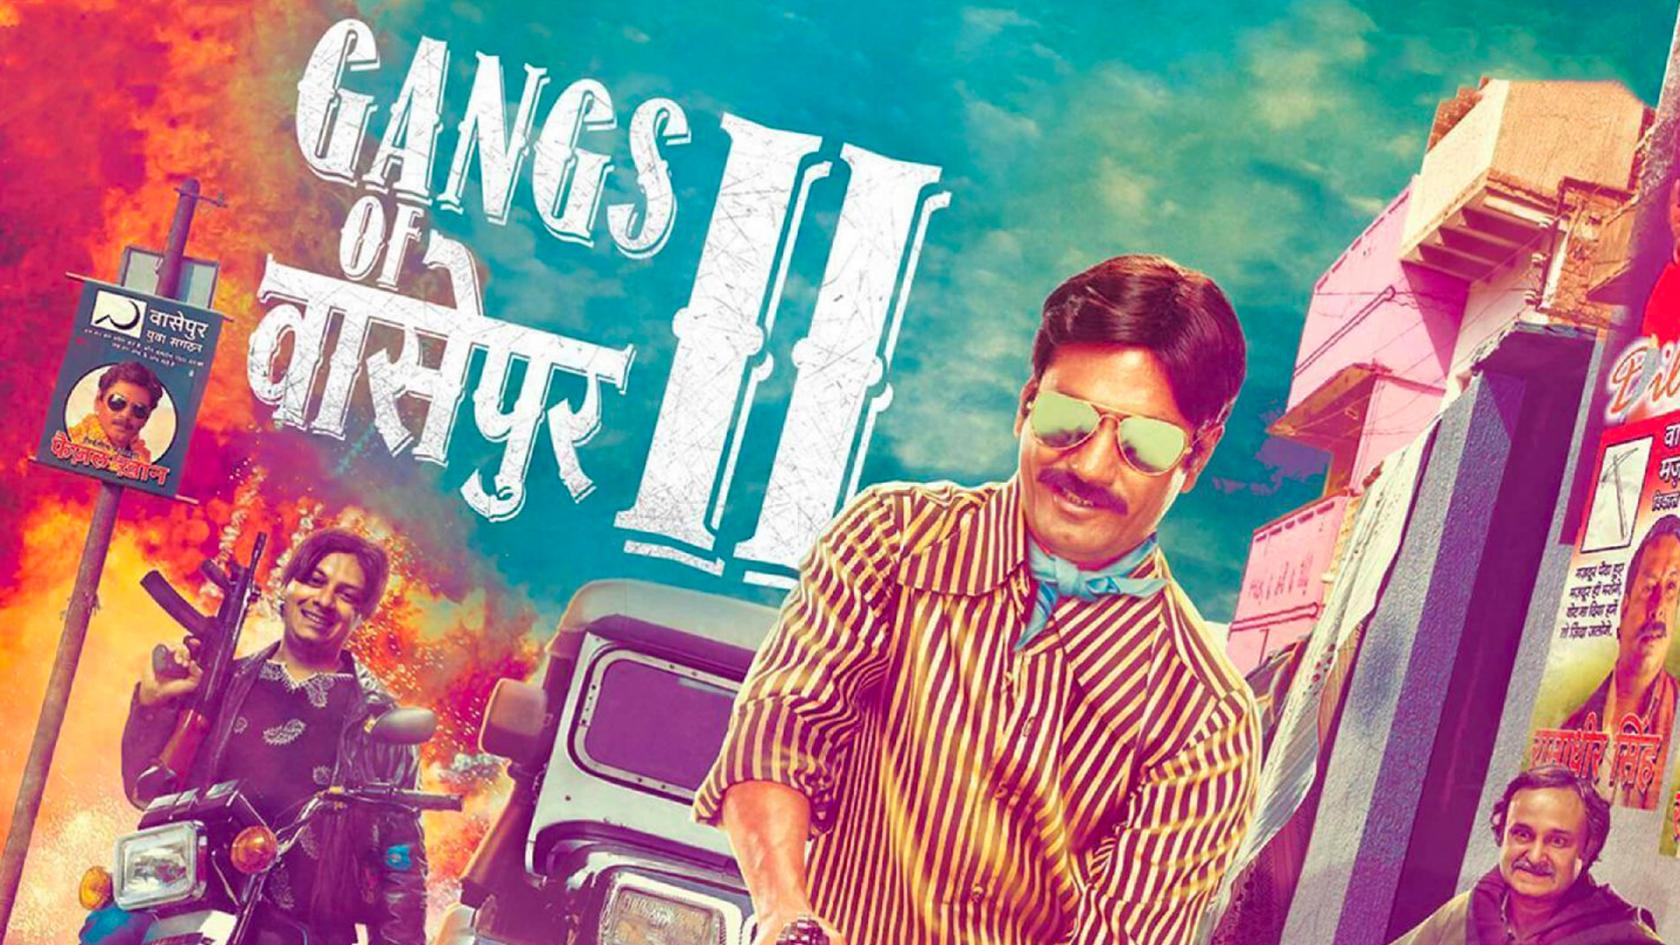 gang of wasseypur 2 full hd movie download